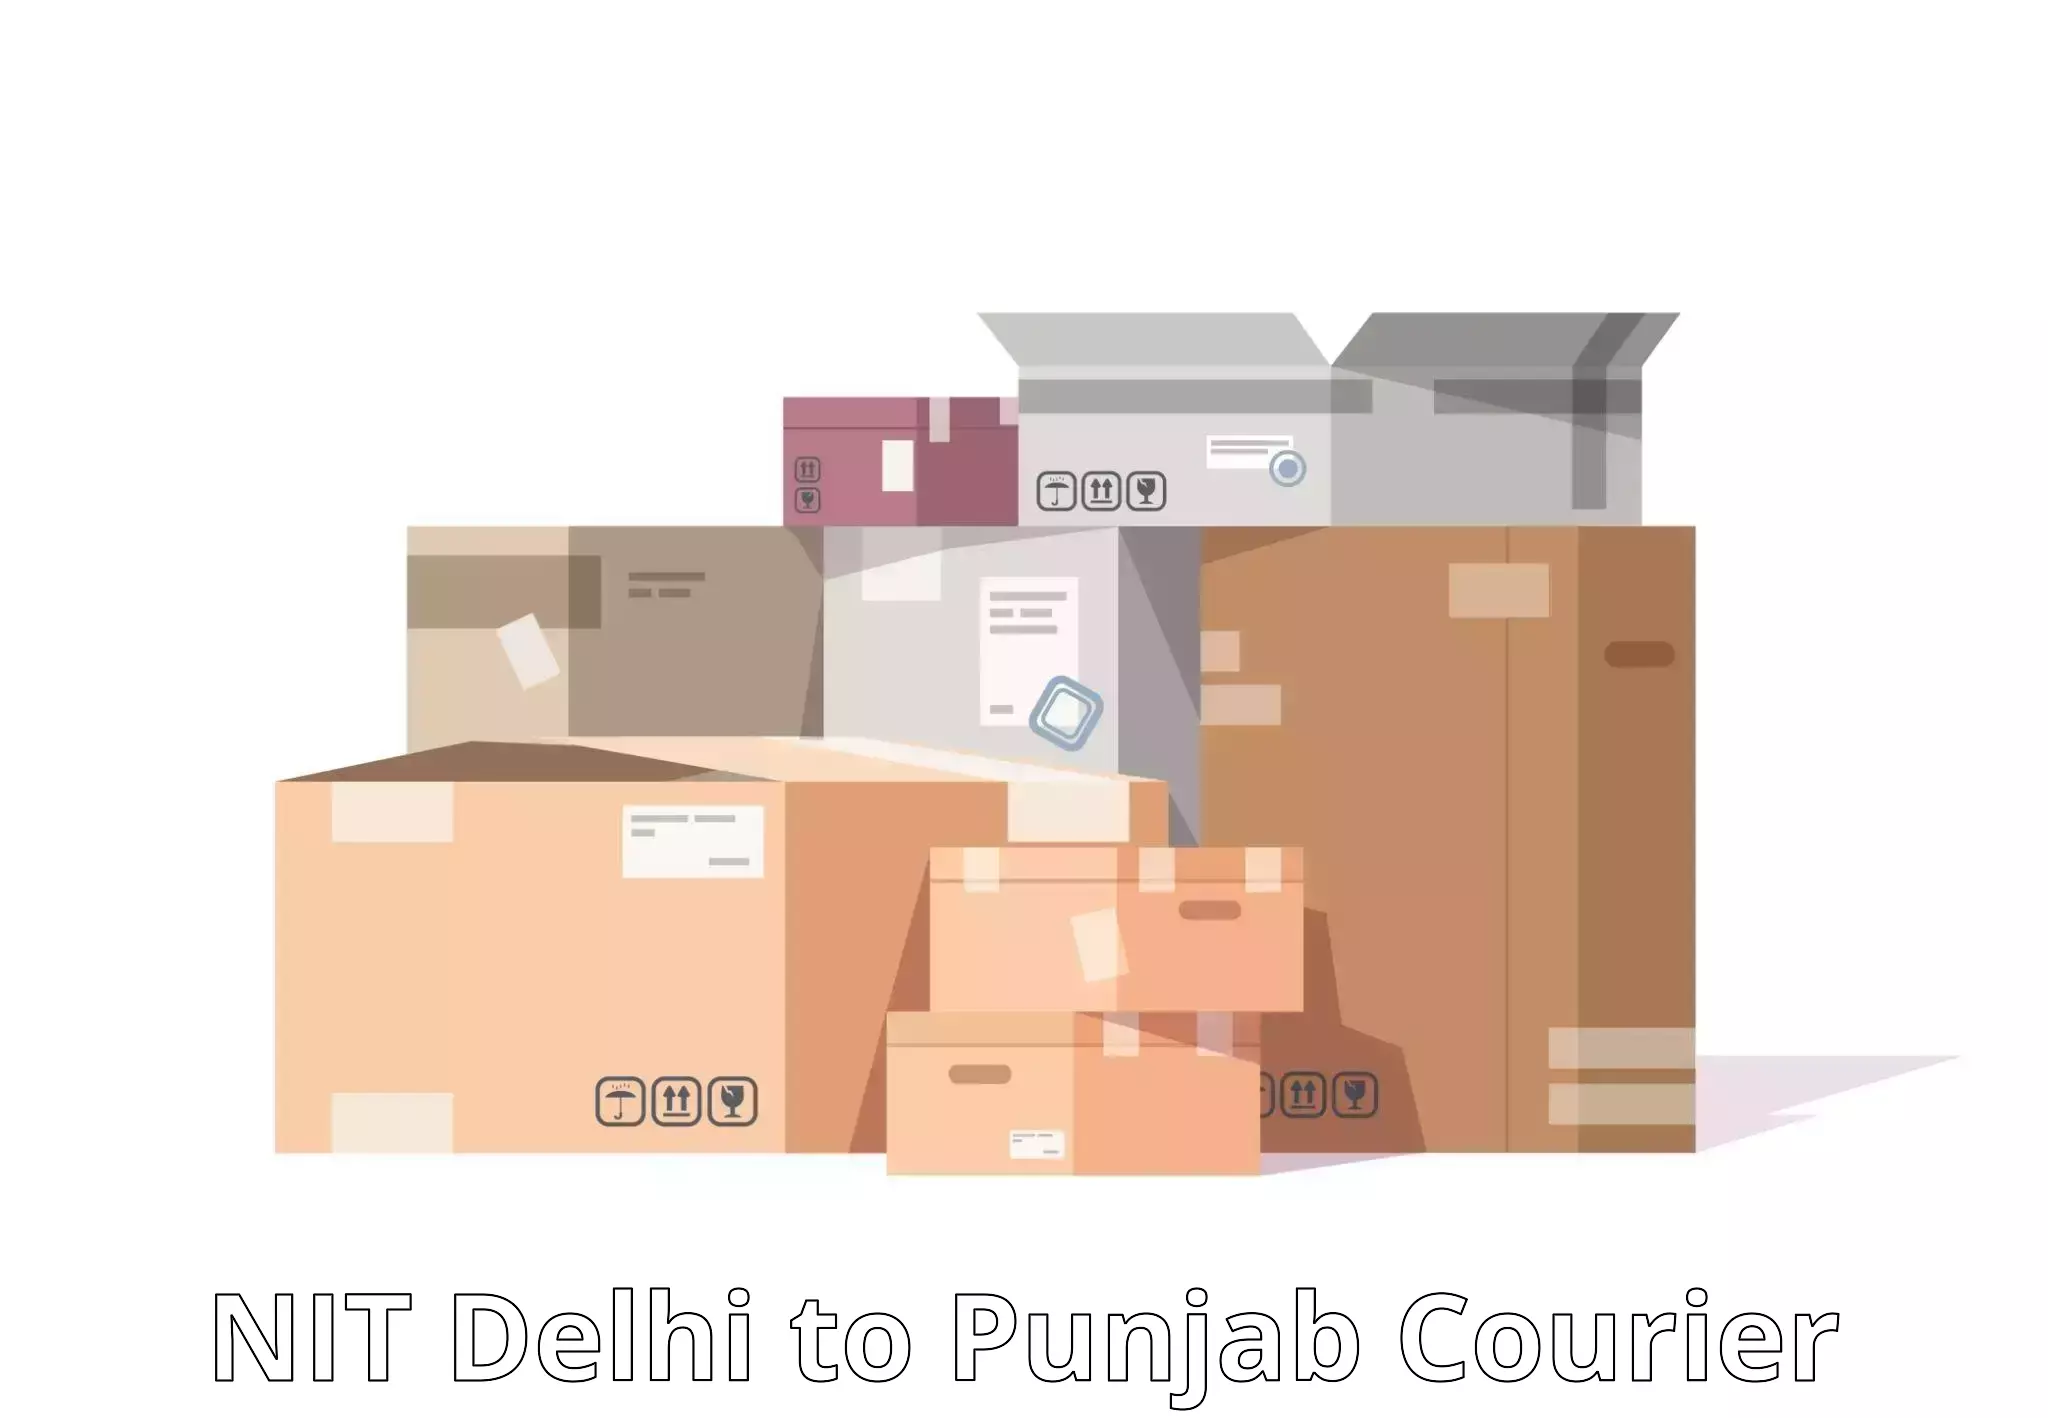 Logistics service provider NIT Delhi to Punjab